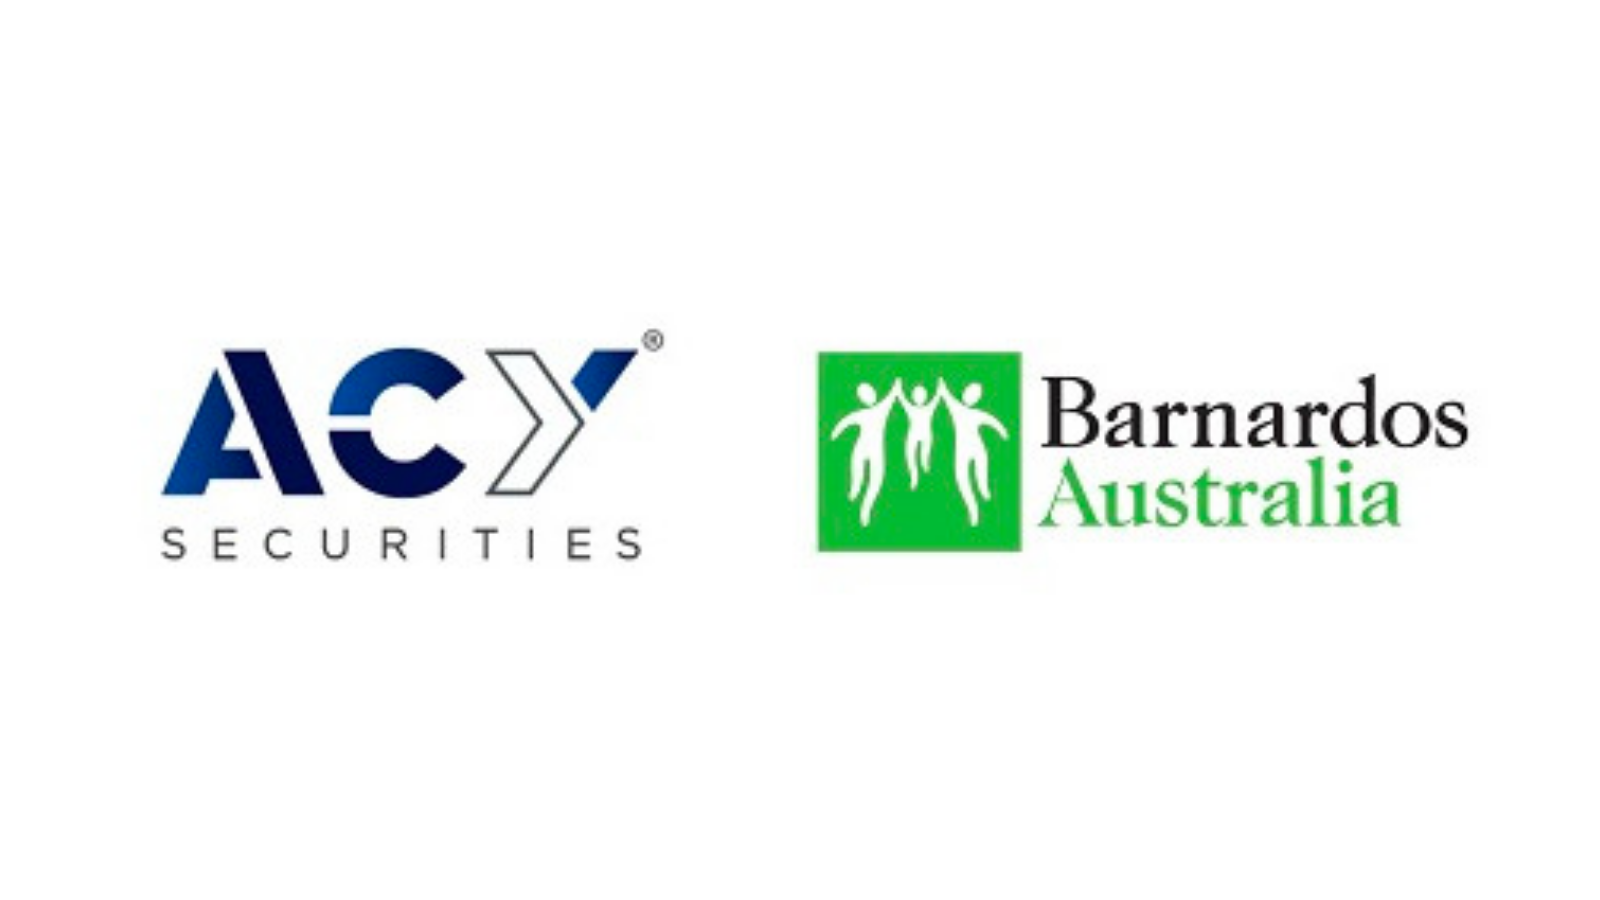 ACY Securities Sponsors Child Protection Charity Barnardos (Australia)